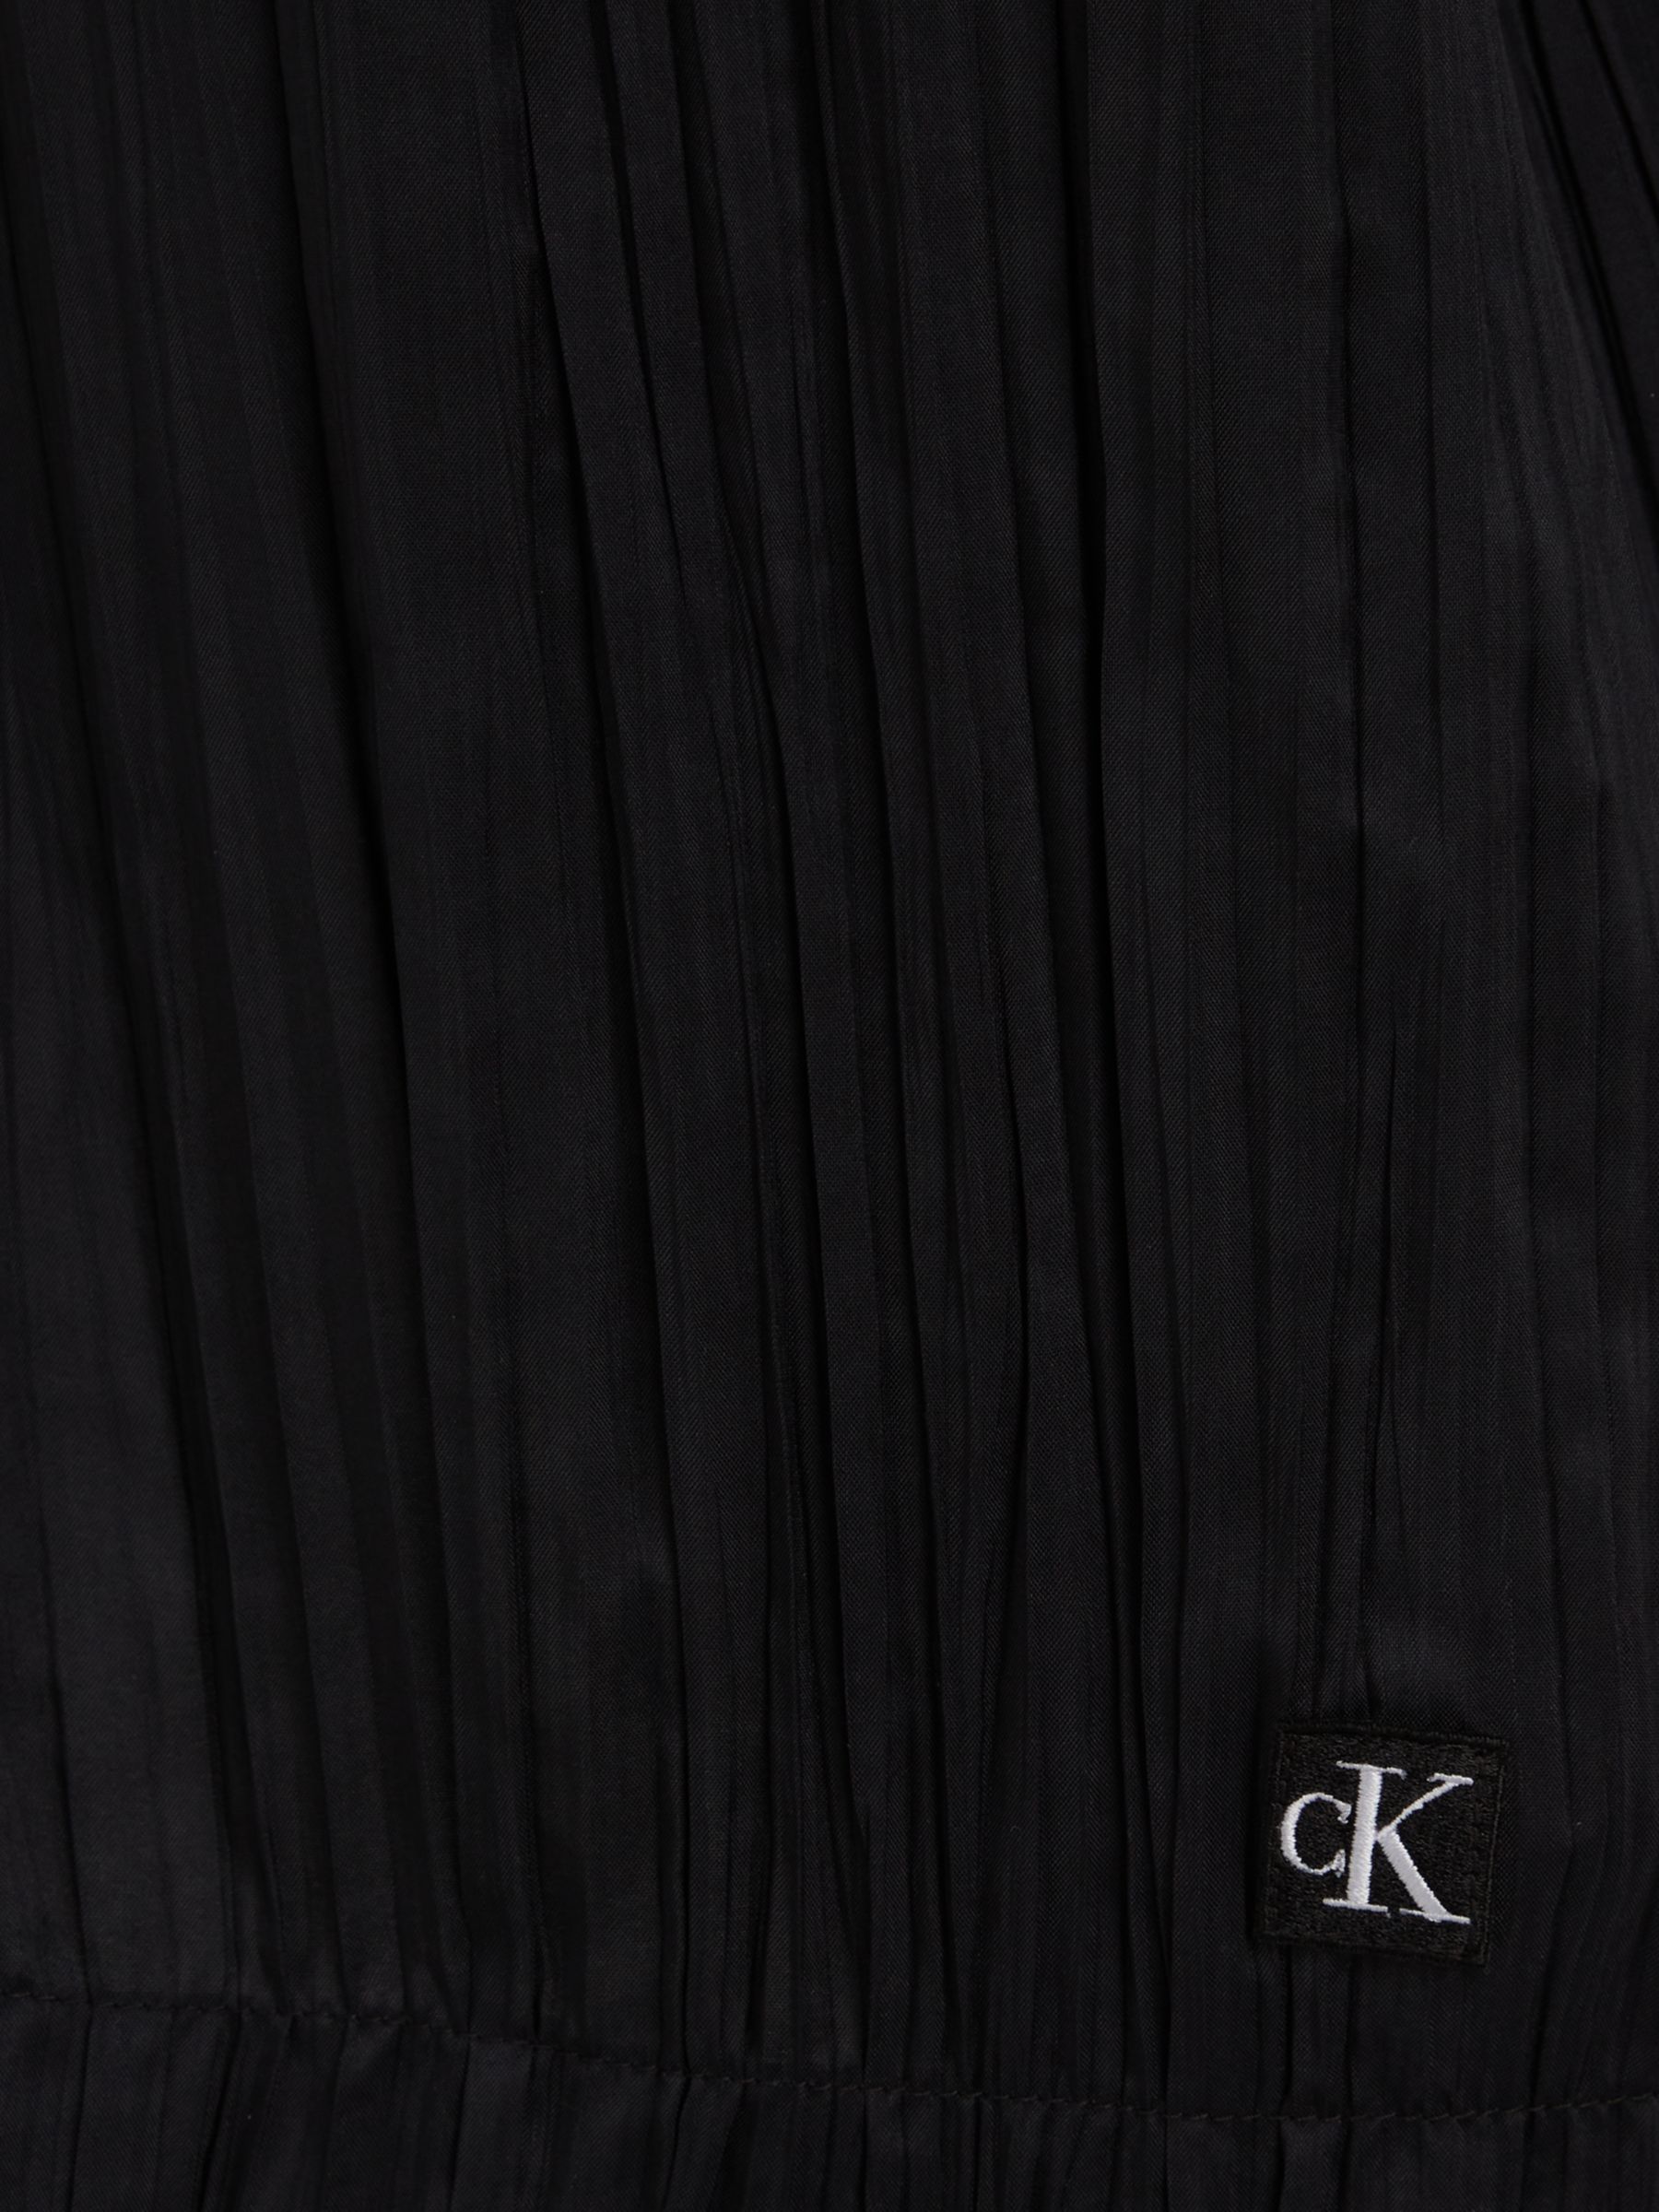 Calvin Klein Kids' Festive Plisse Dress, Ck Black, 10 years